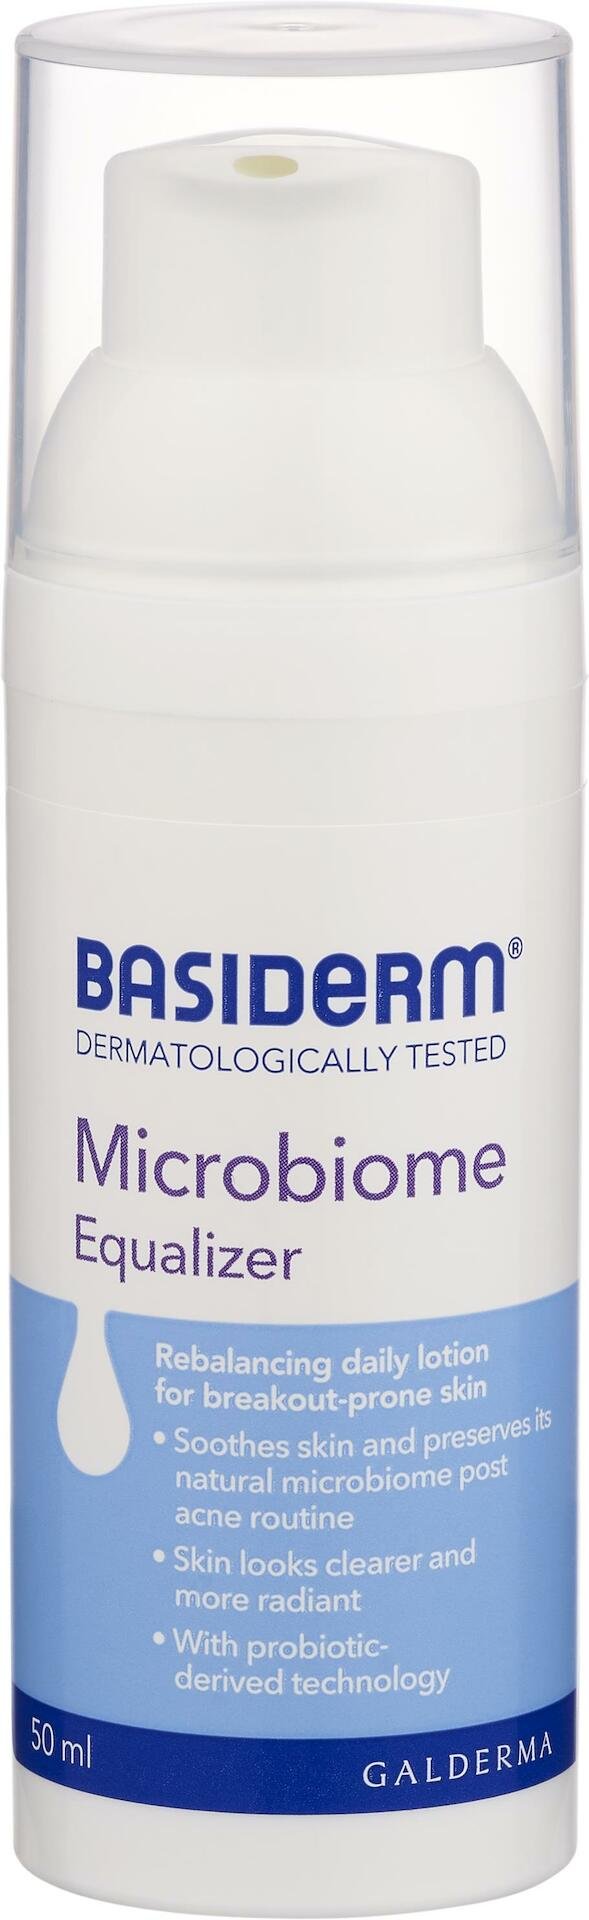 Basiderm Microbiome Equalizer 50ml